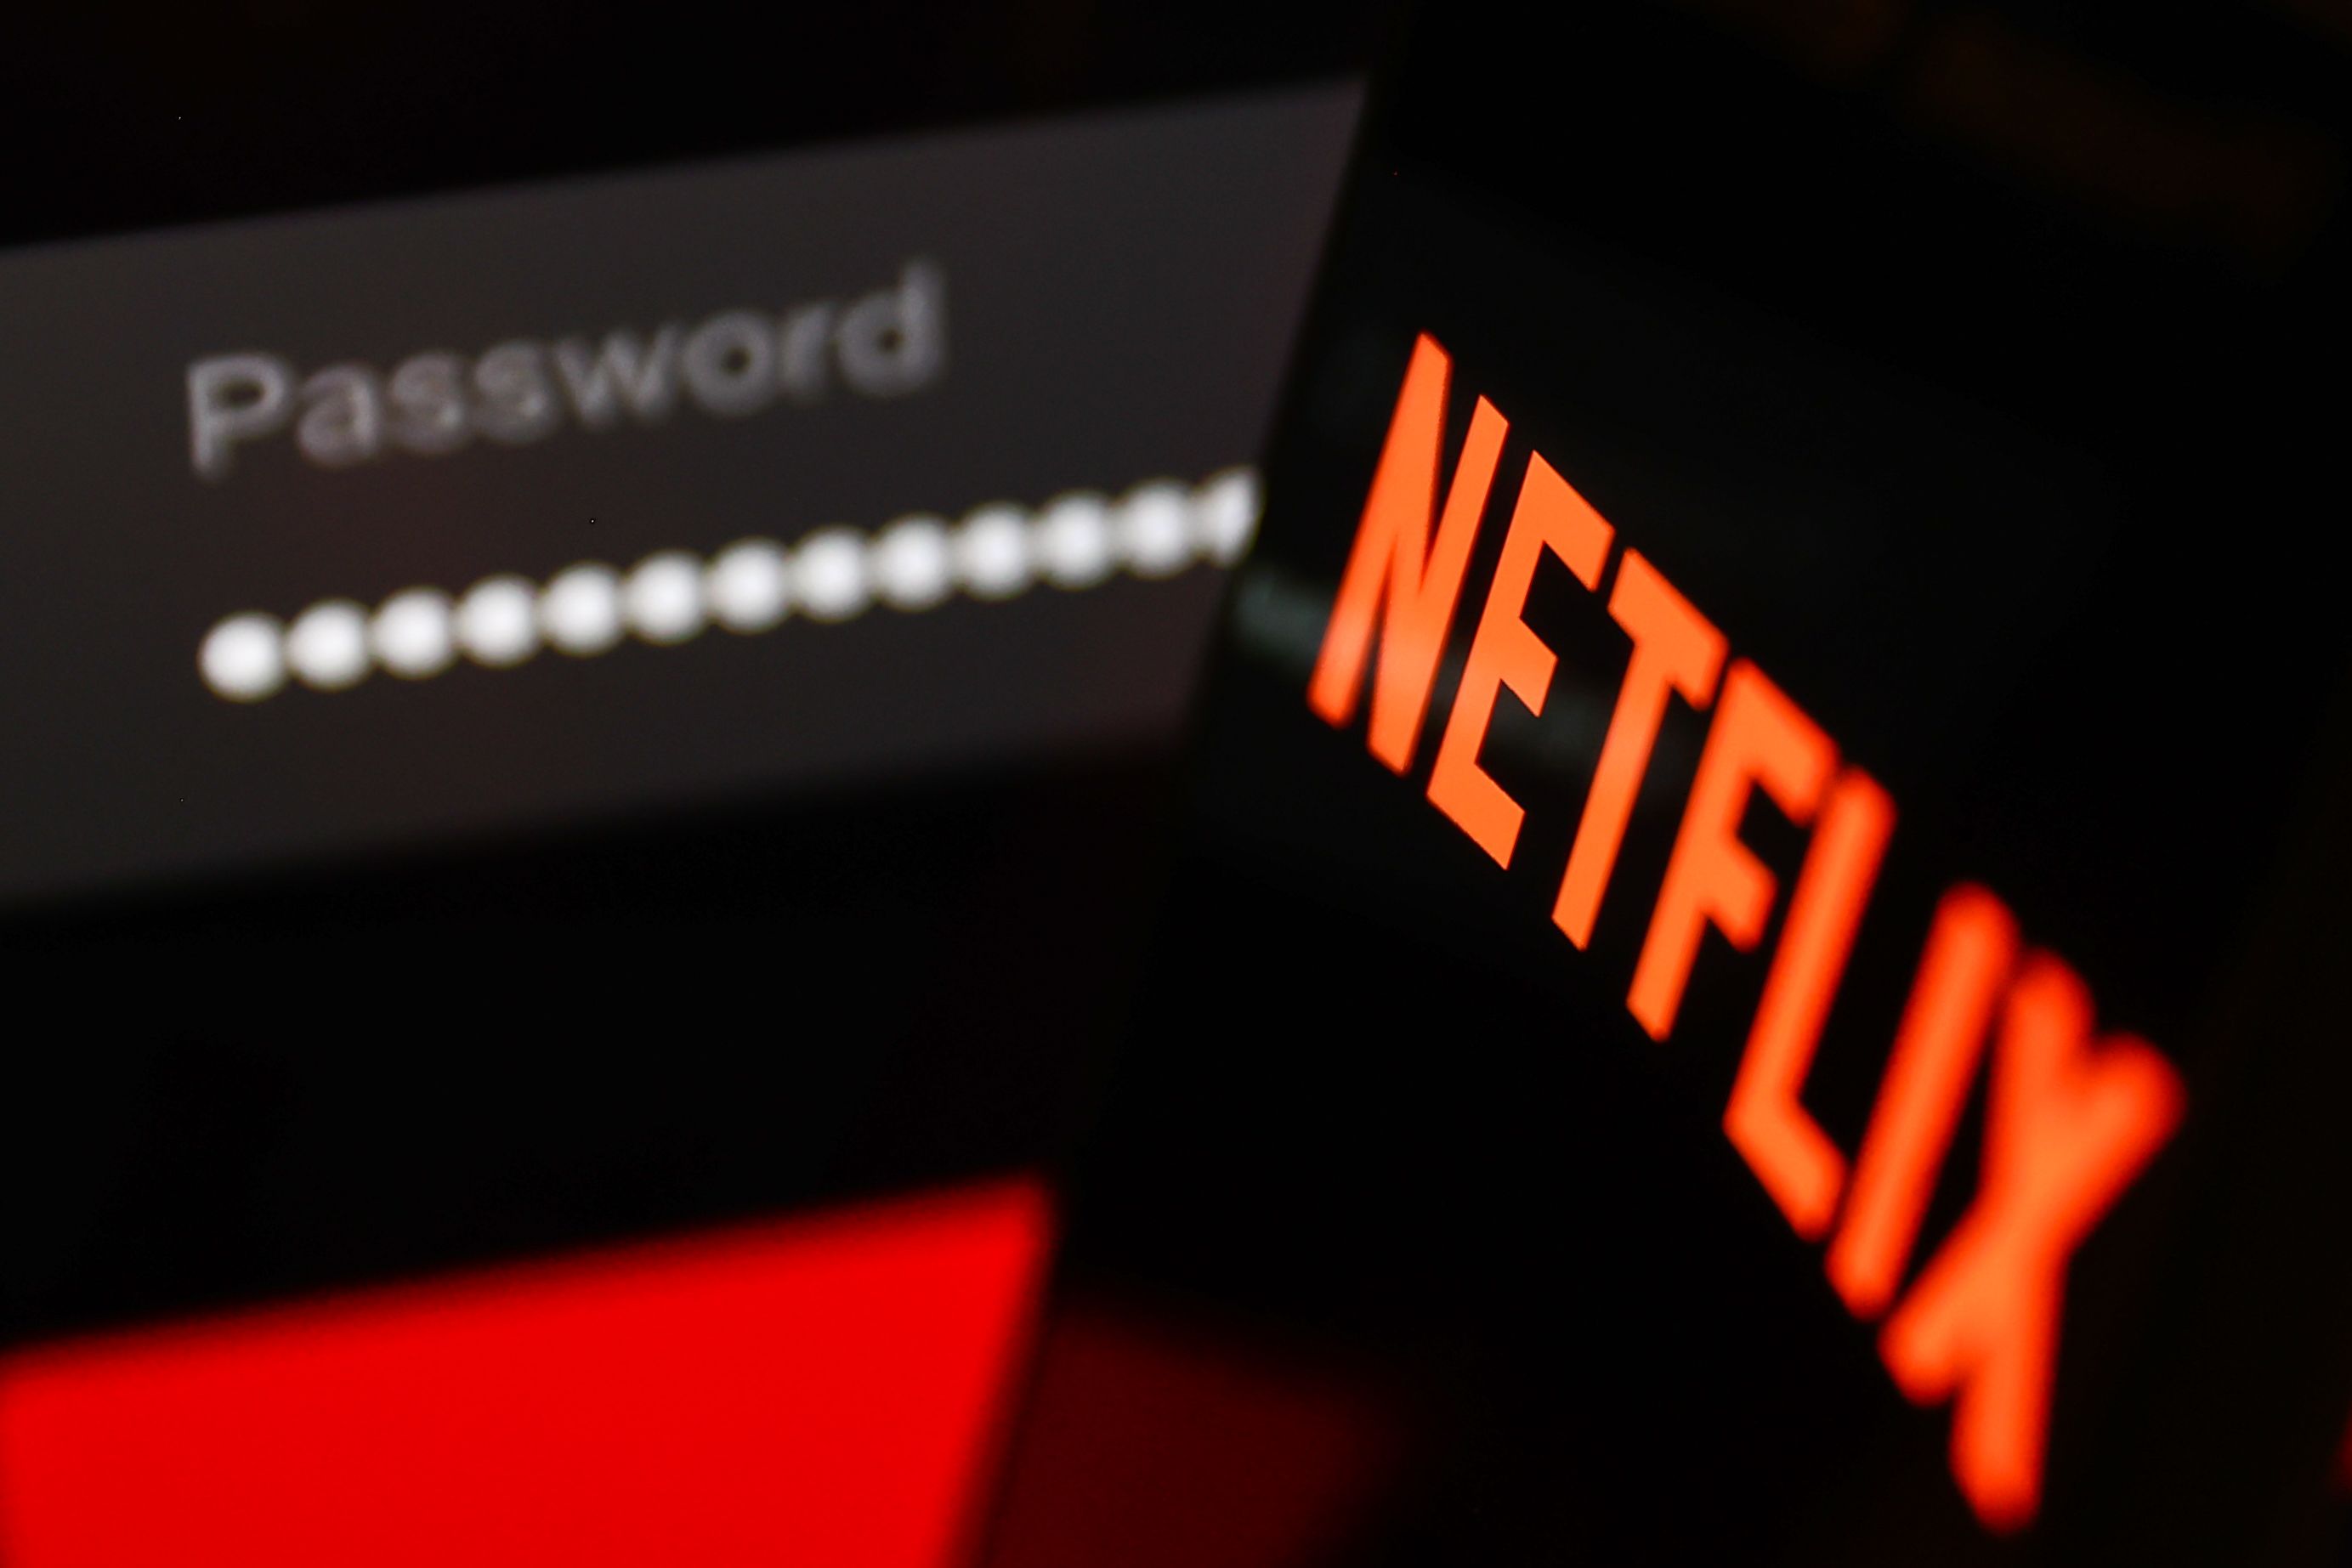 Netflix finally addresses password sharing restriction reports